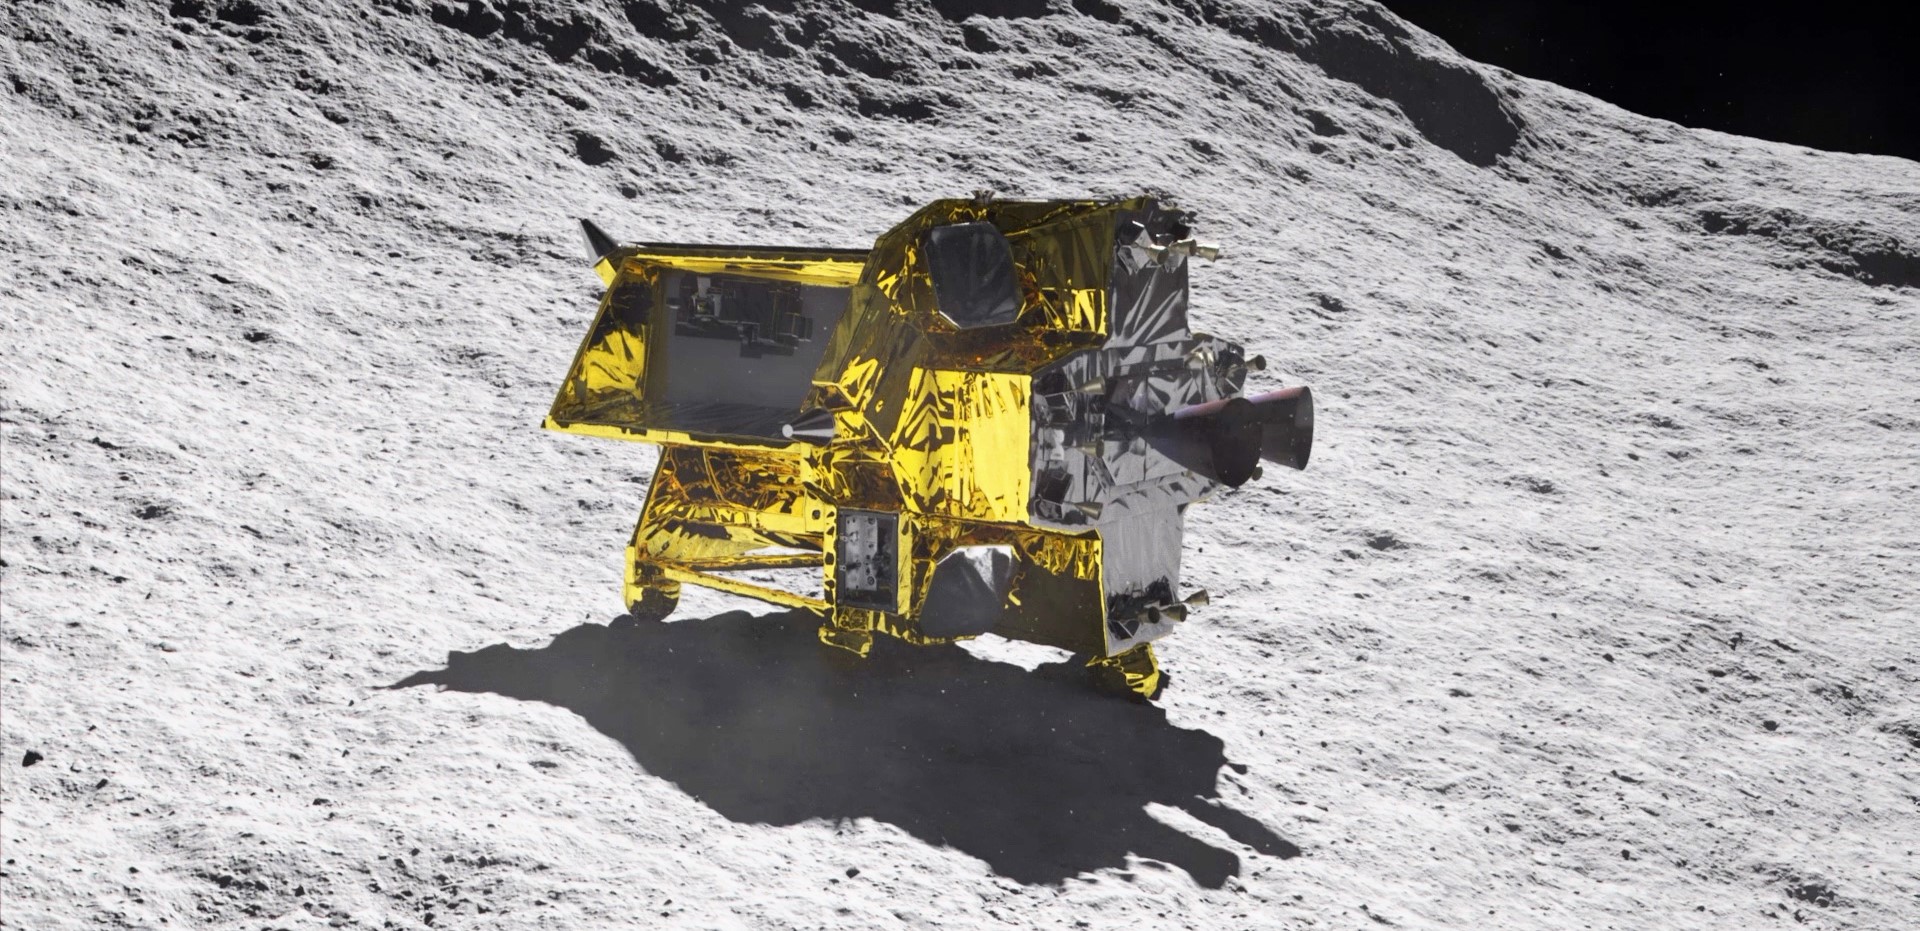 Illustration: SLIM lander on the moon